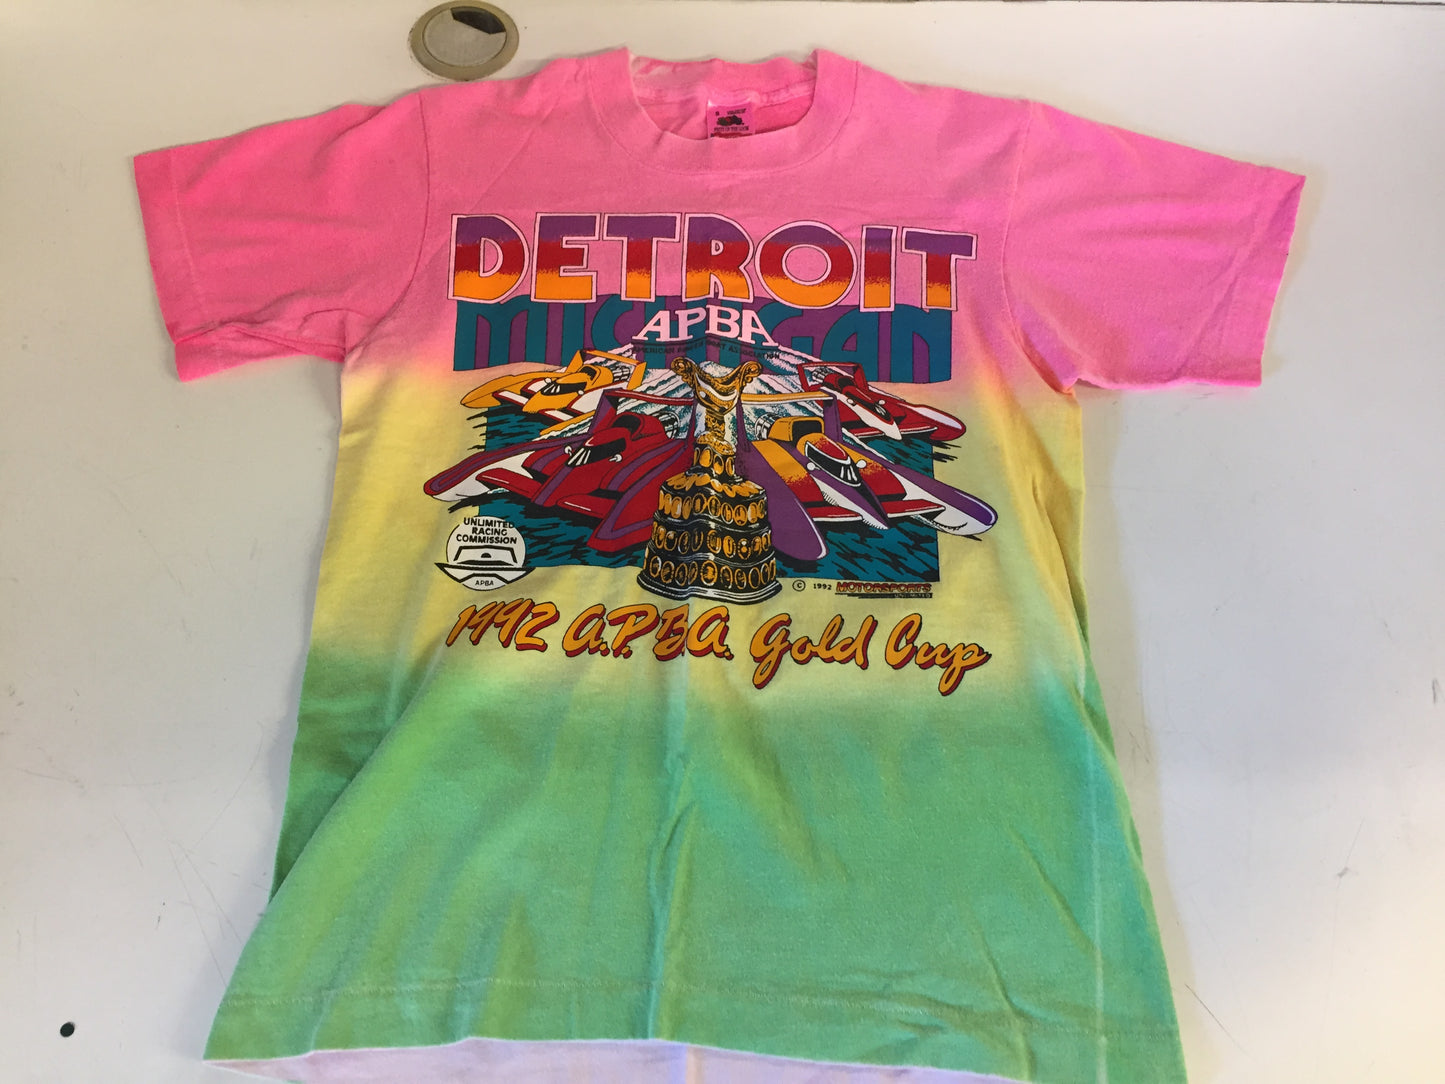 Vintage 1992 Detroit APBA T Shirt American Power Boat Association Gold Cup Motorsport Pink